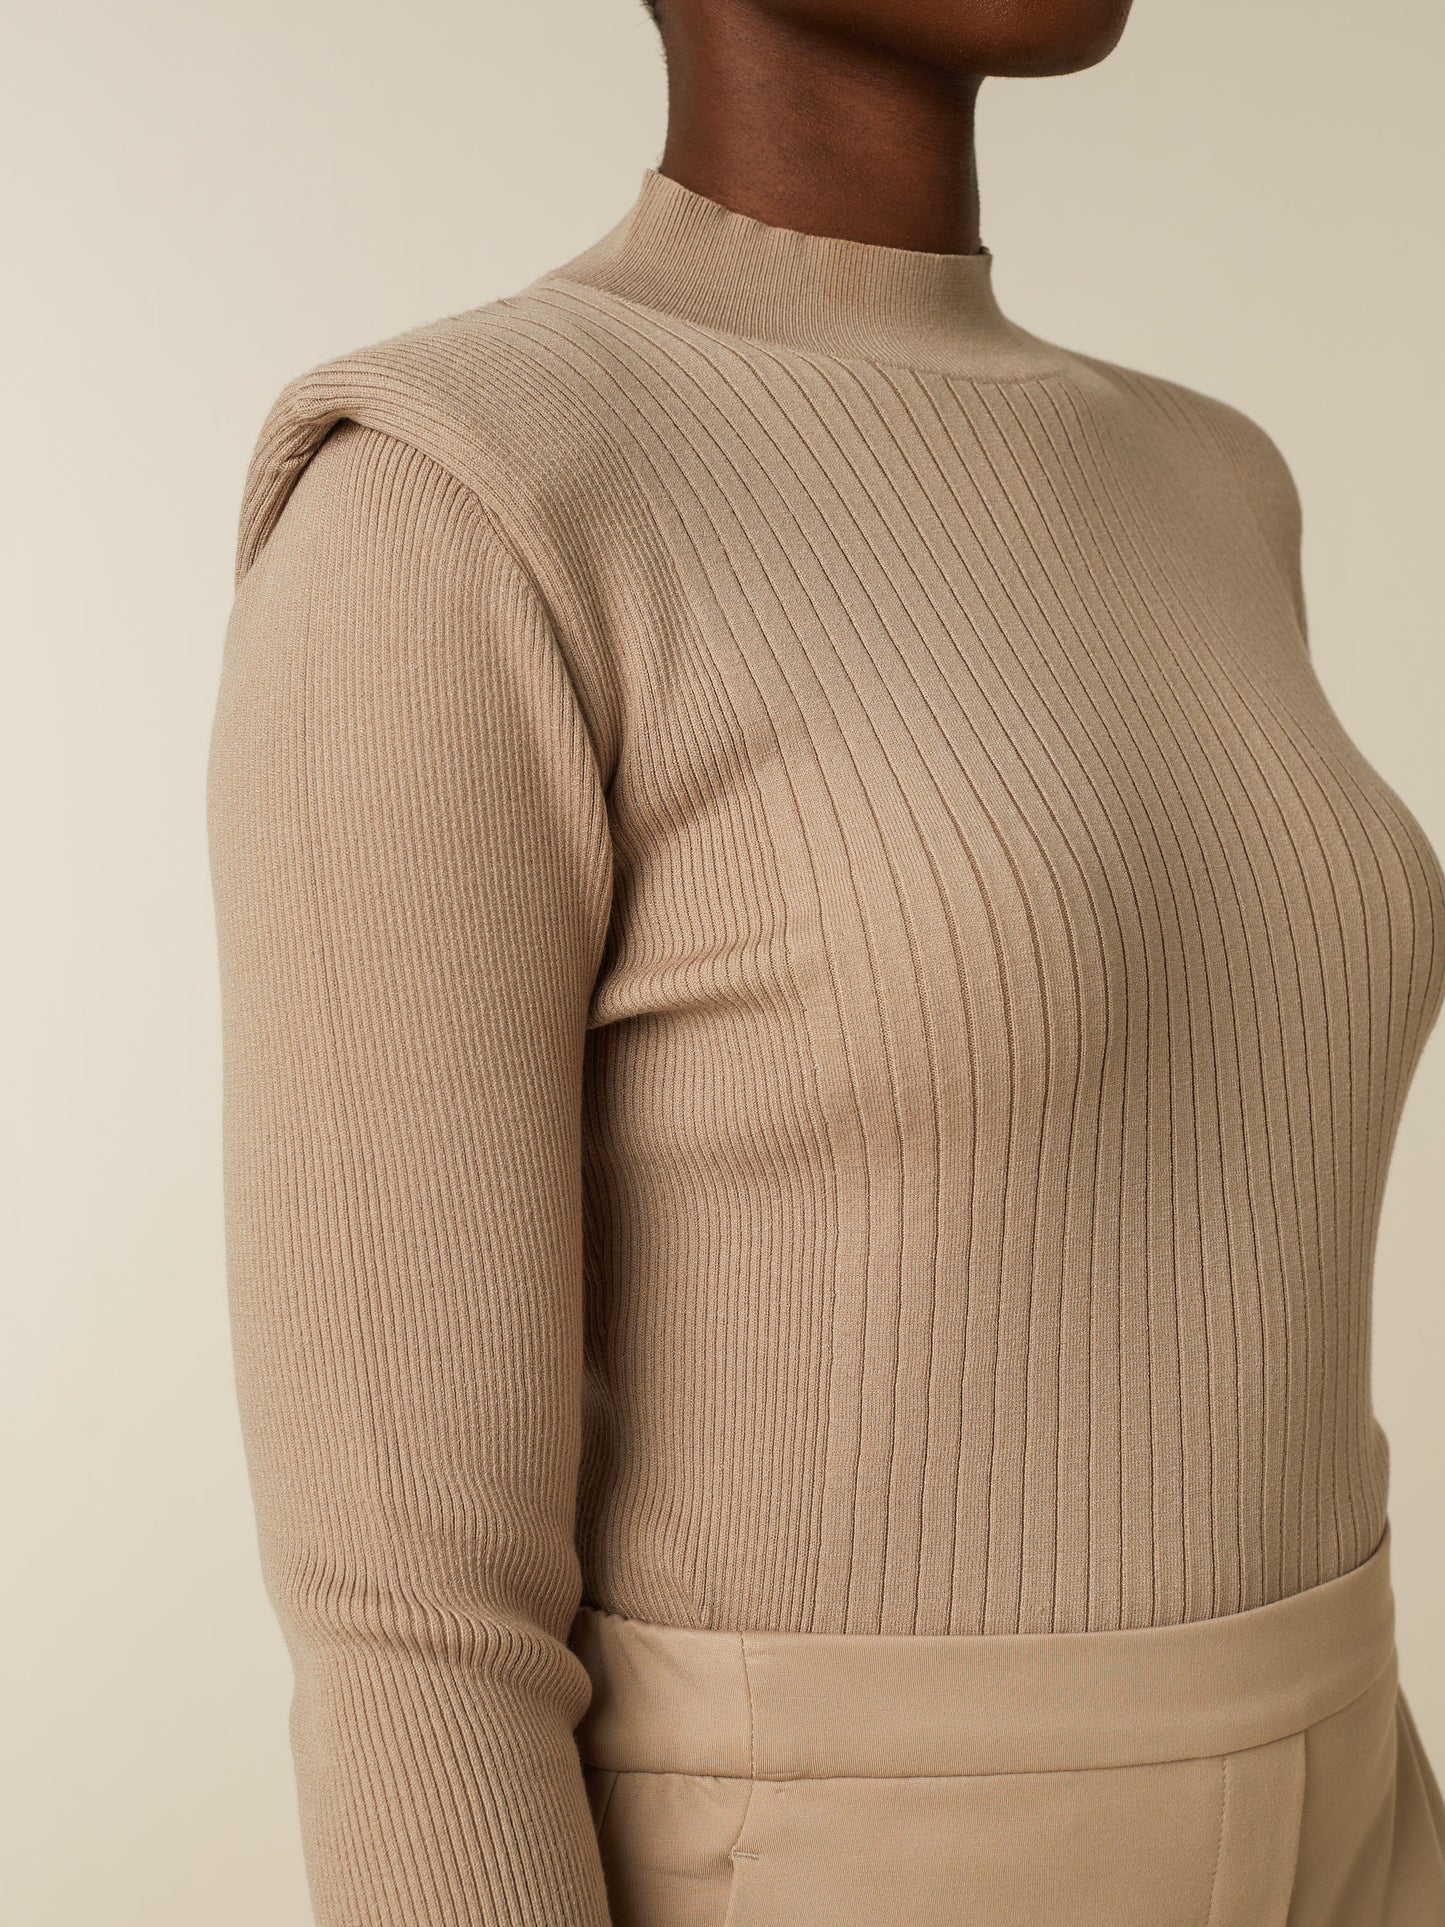 BROOKE pullover - Natural